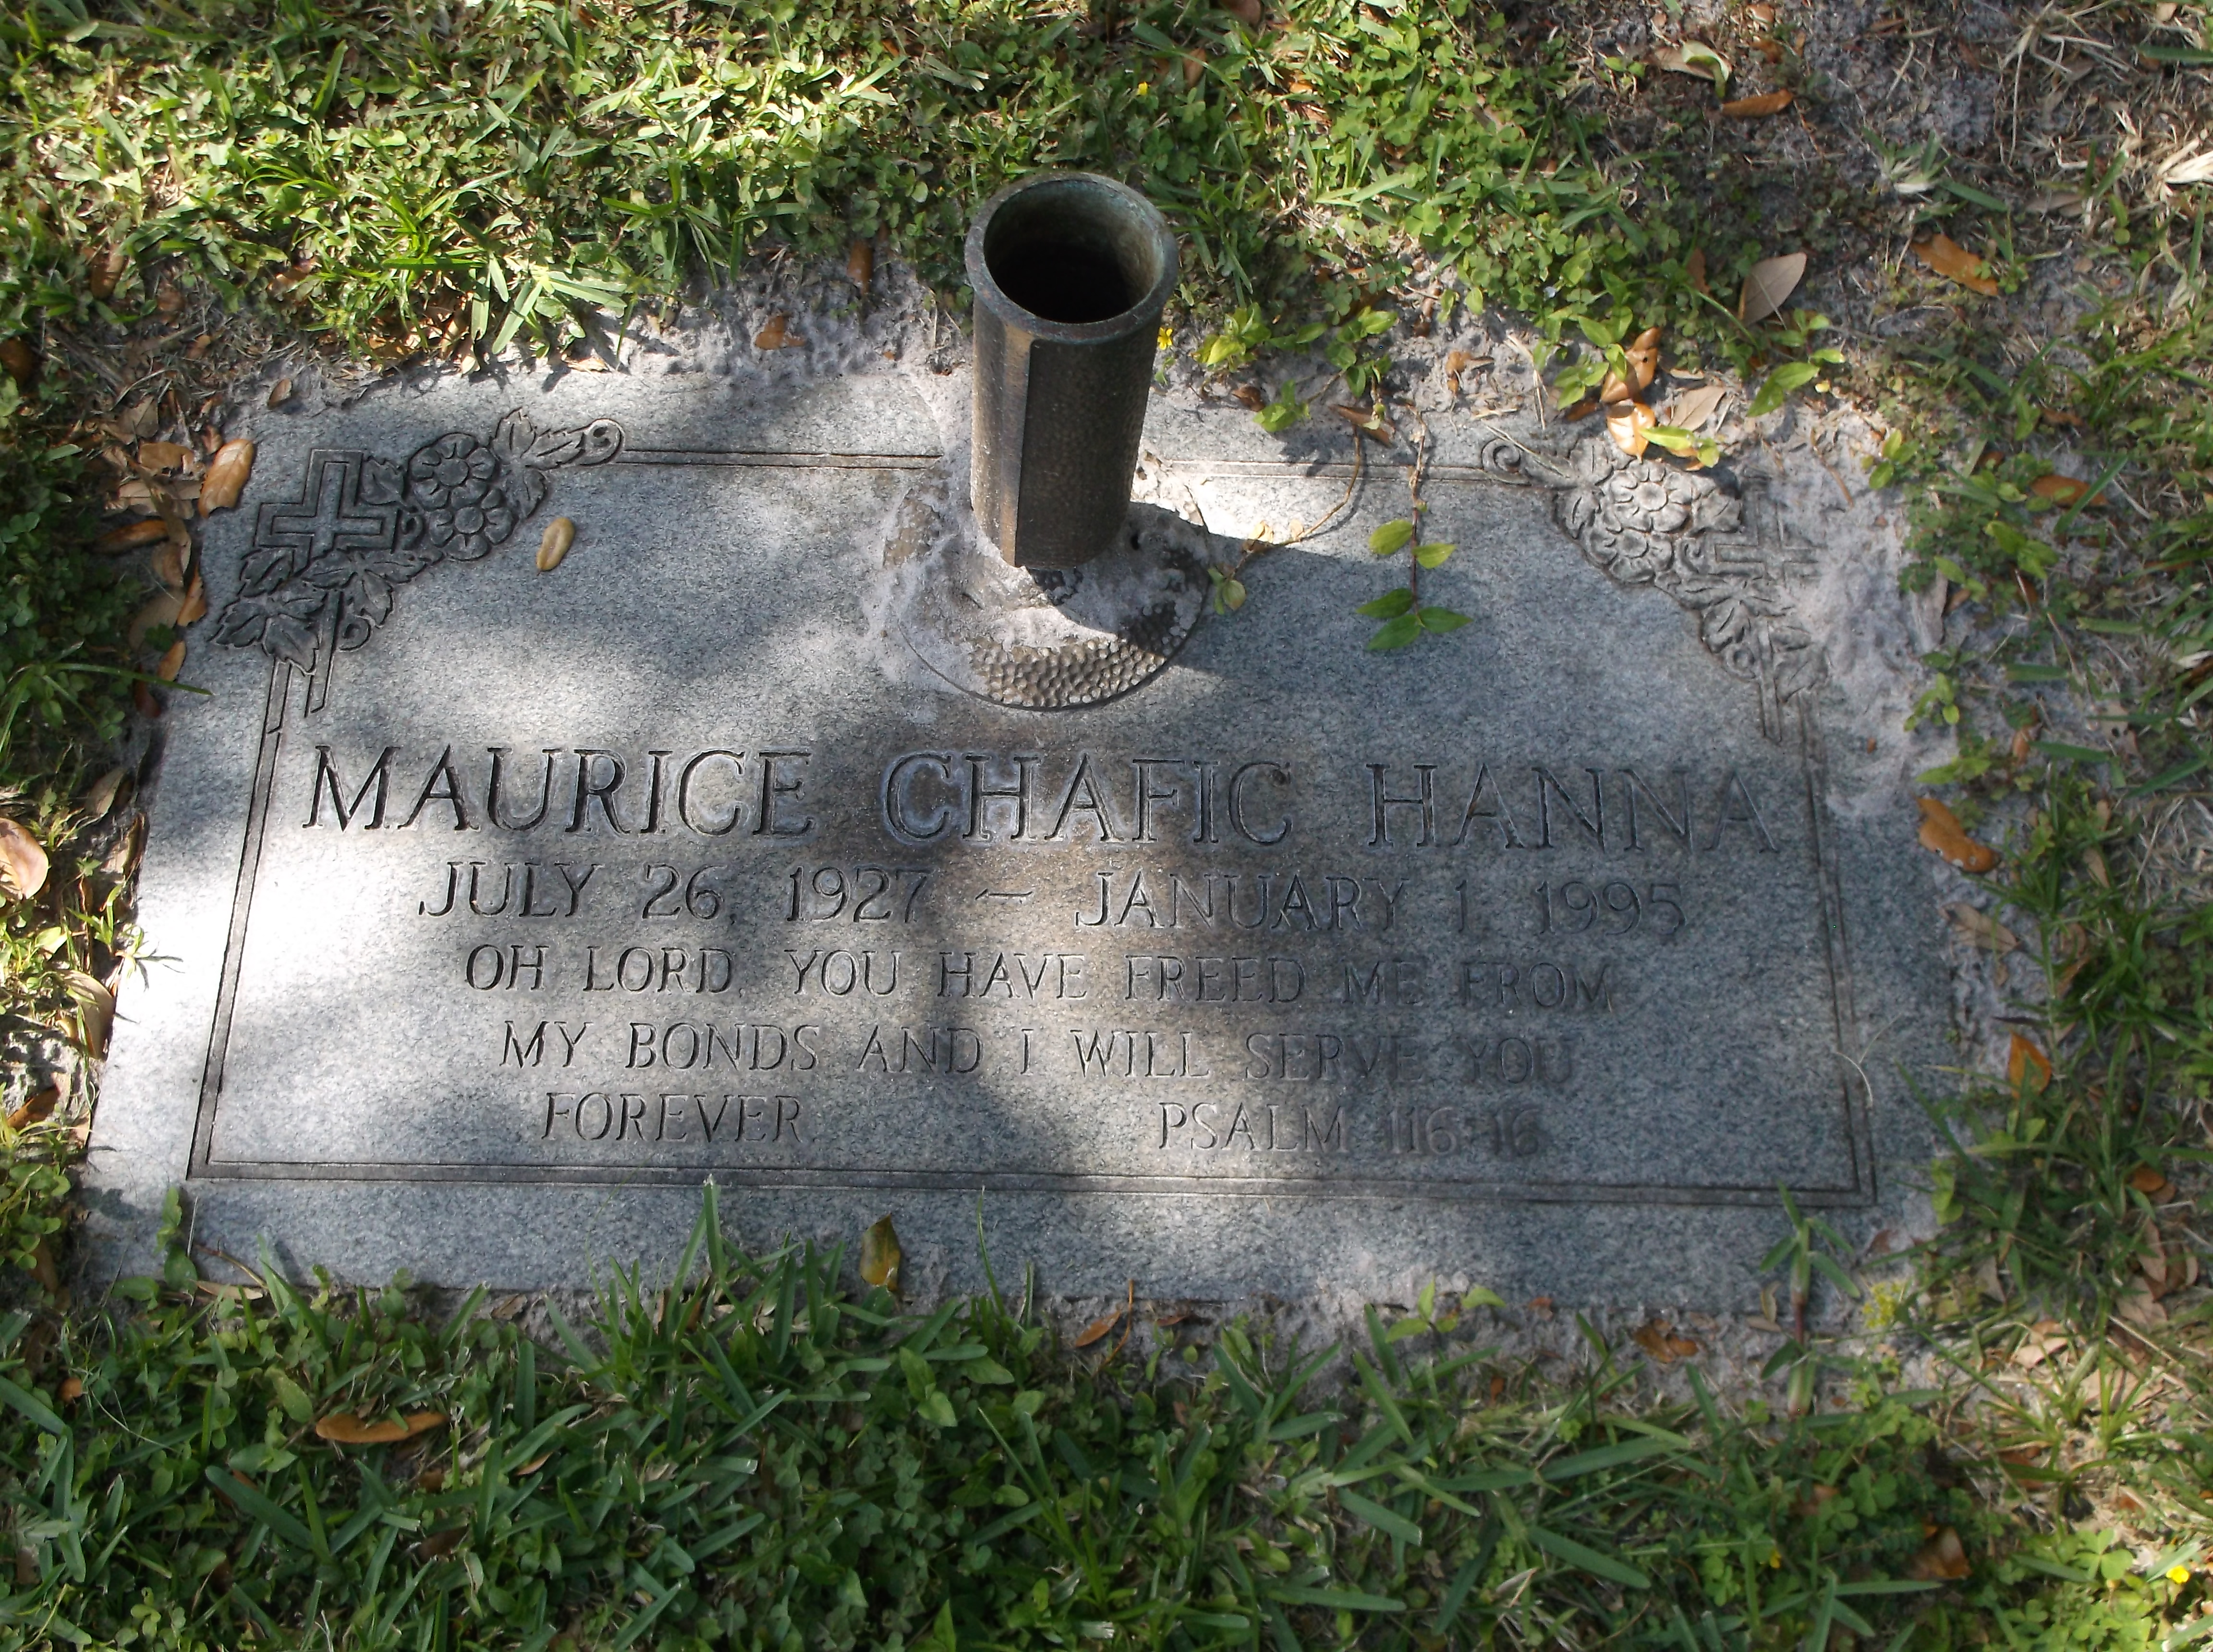 Maurice Chafic Hanna